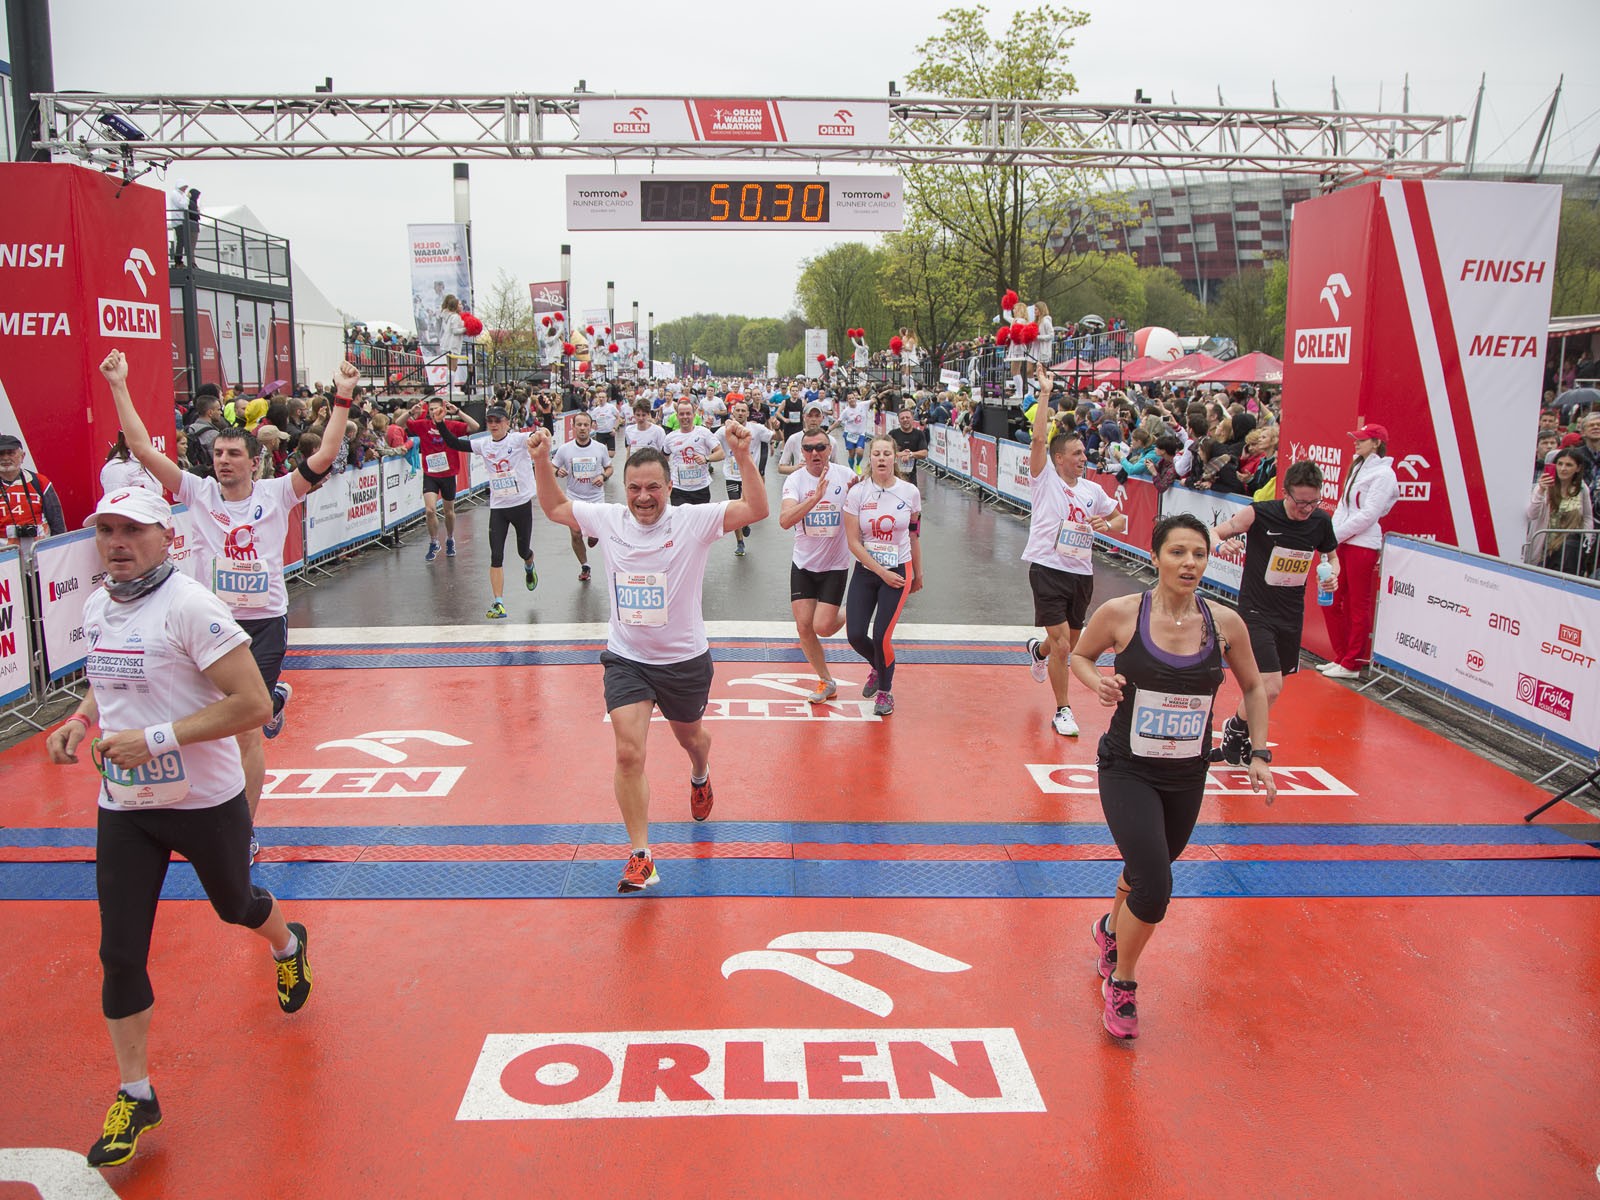 Places branding - Handpainting Orlen Warsaw Marathon finishing line | Orlen Warsaw Marathon | Portfolio